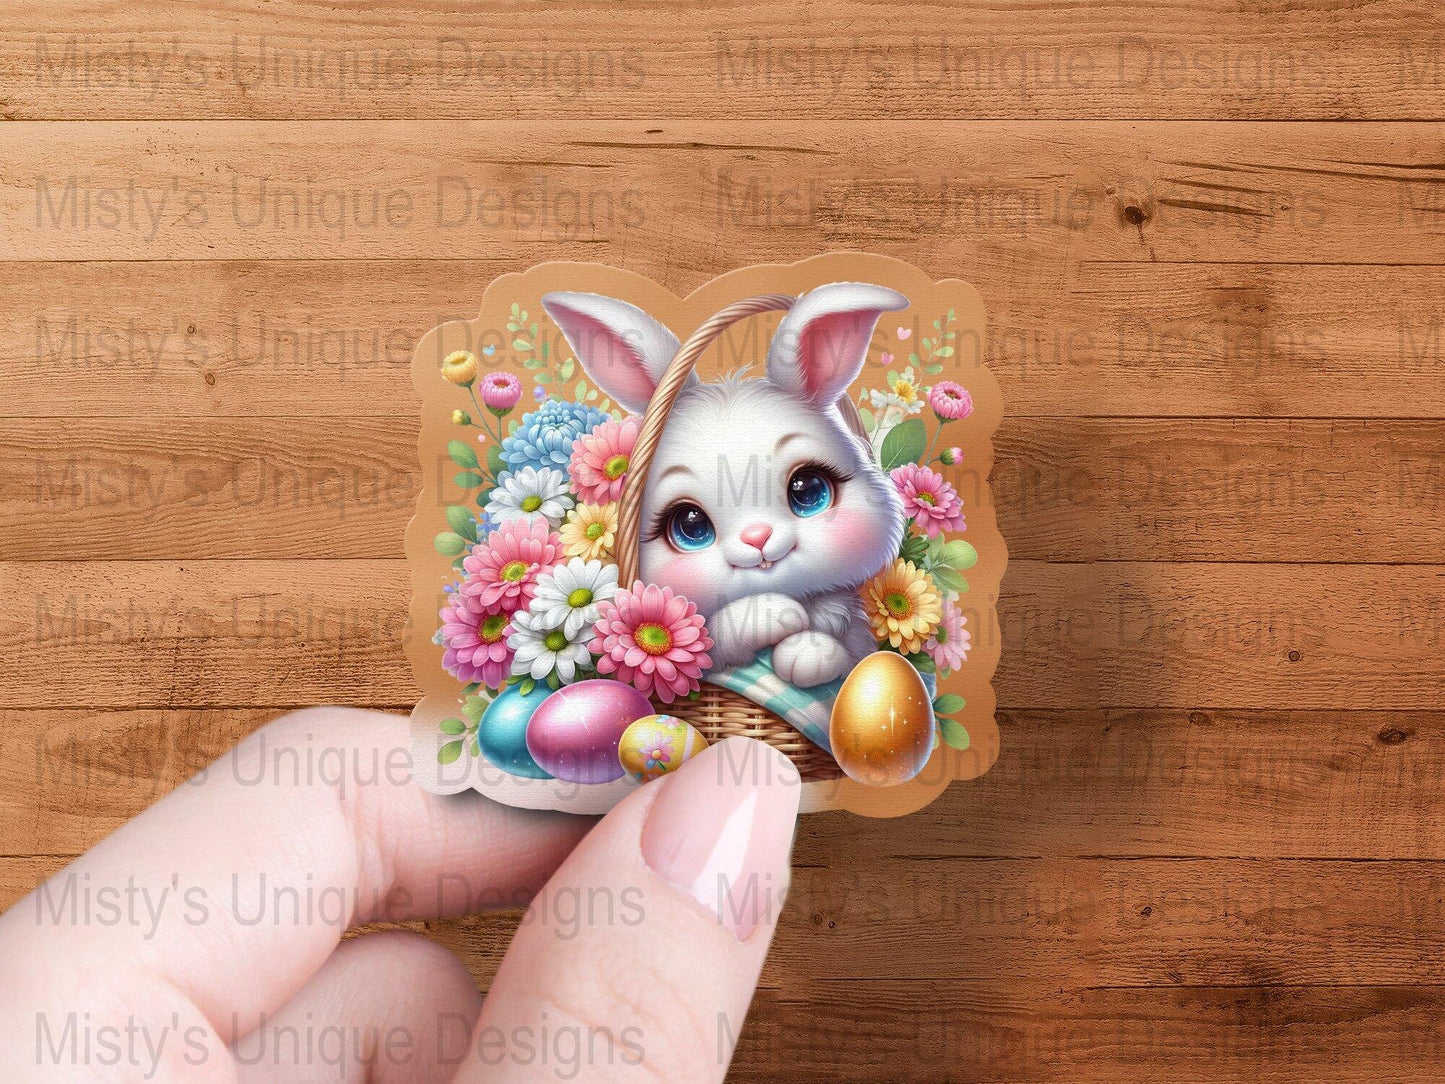 Easter Bunny Clipart, Cute Rabbit Digital Download, Spring Flowers PNG, Basket with Easter Eggs, Festive Card Making, DIY Crafts Design